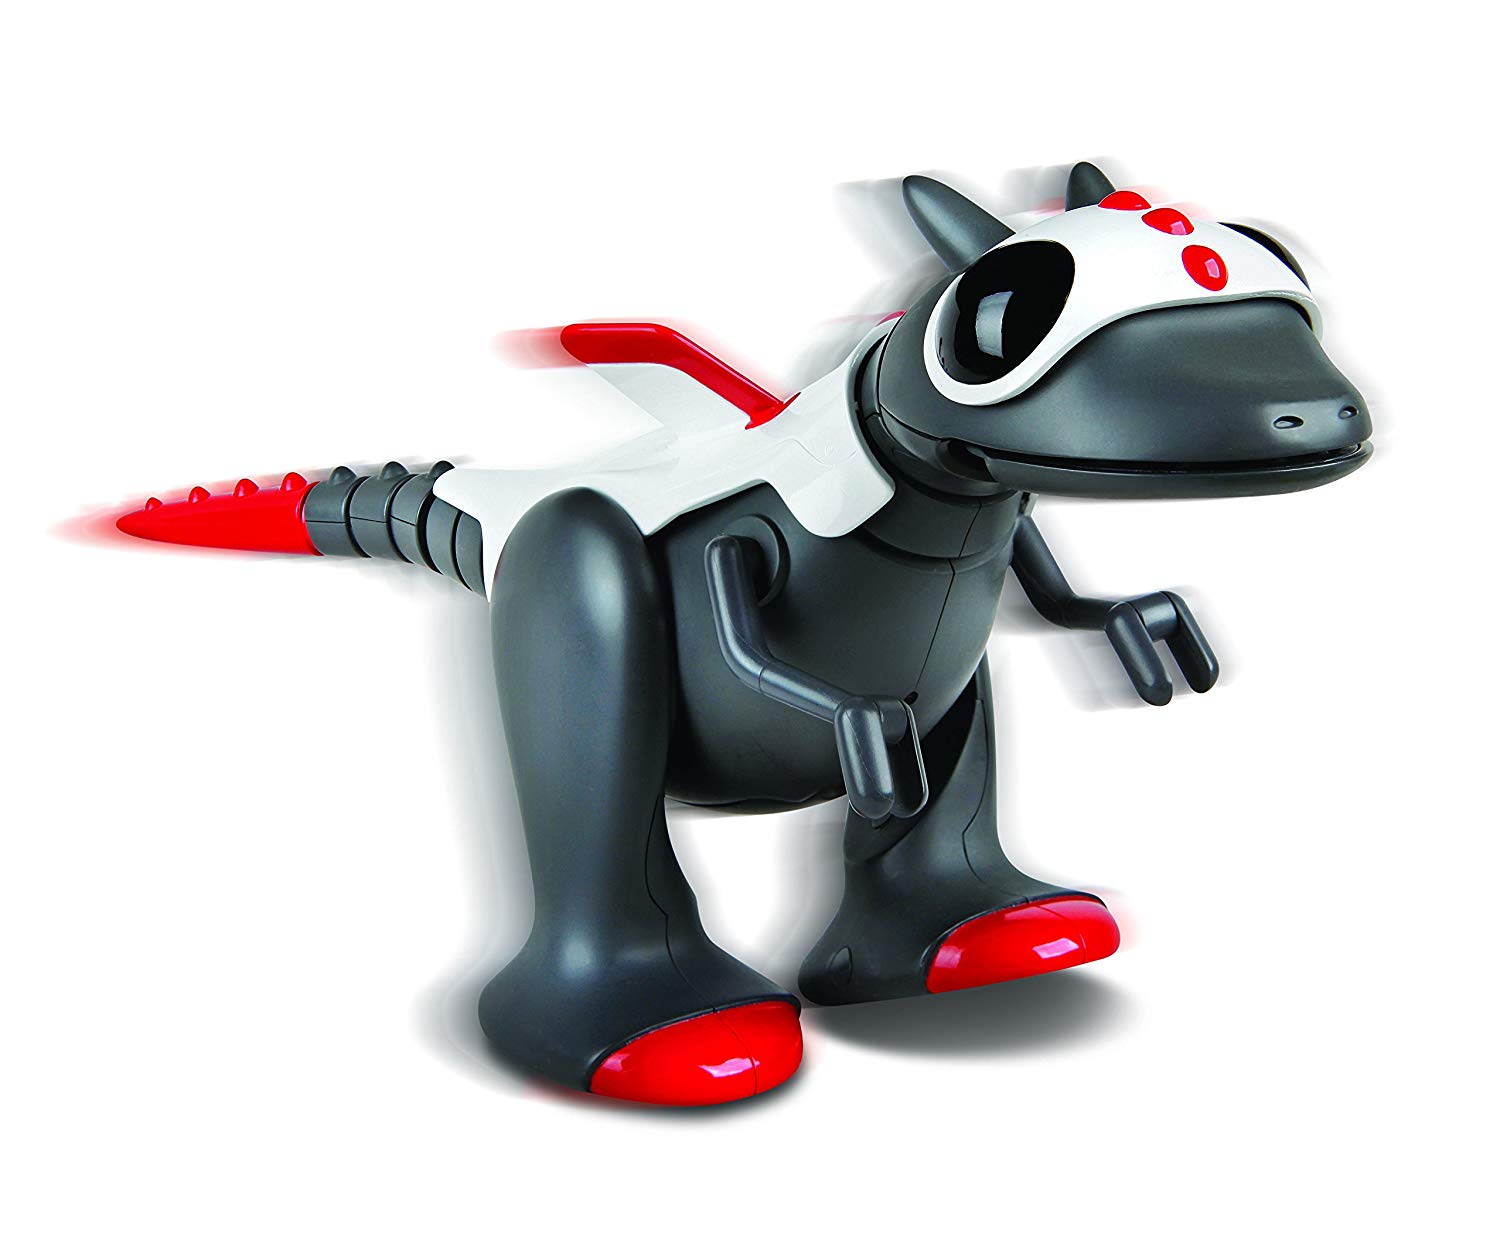 The toy robot dragon Ycoo